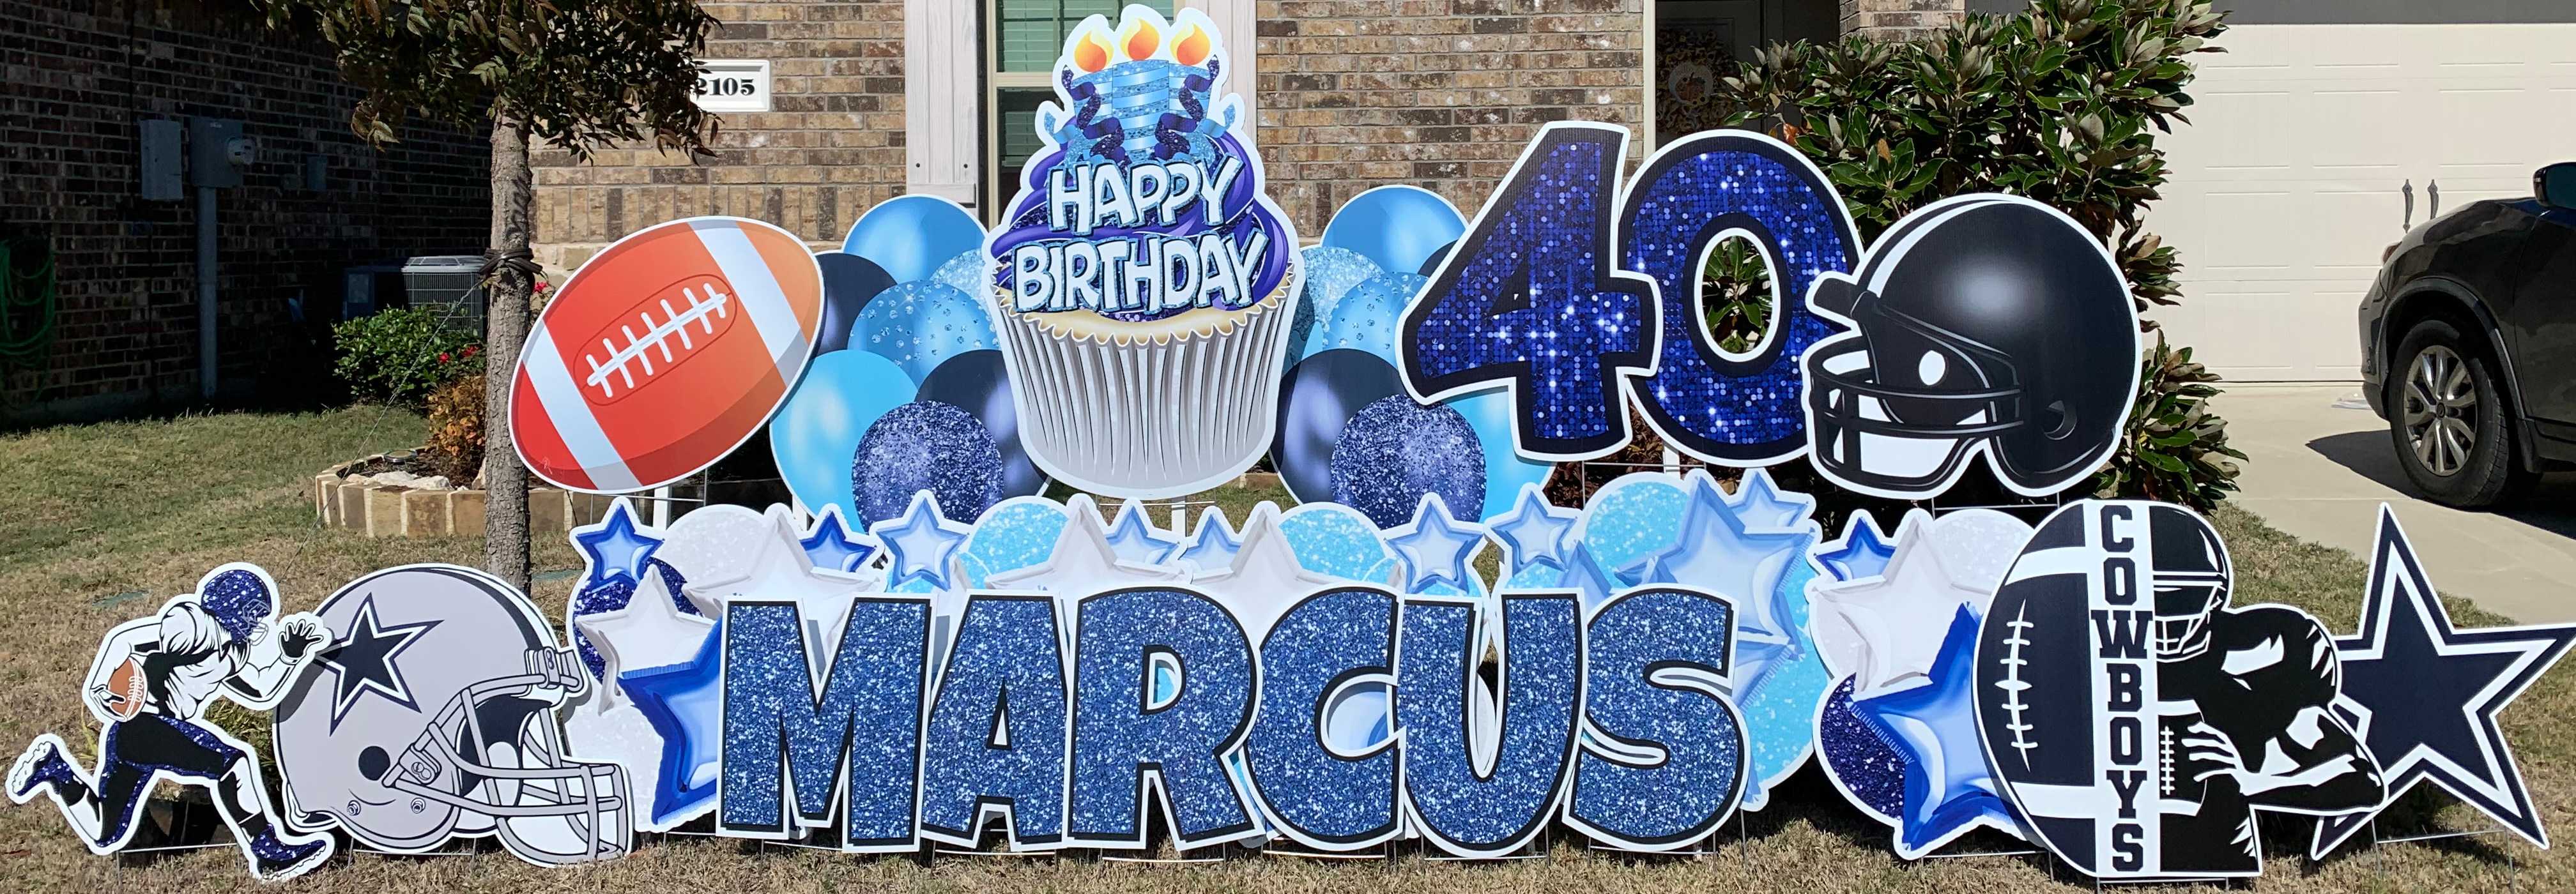 Yard card sign happy birthday marcus 40 